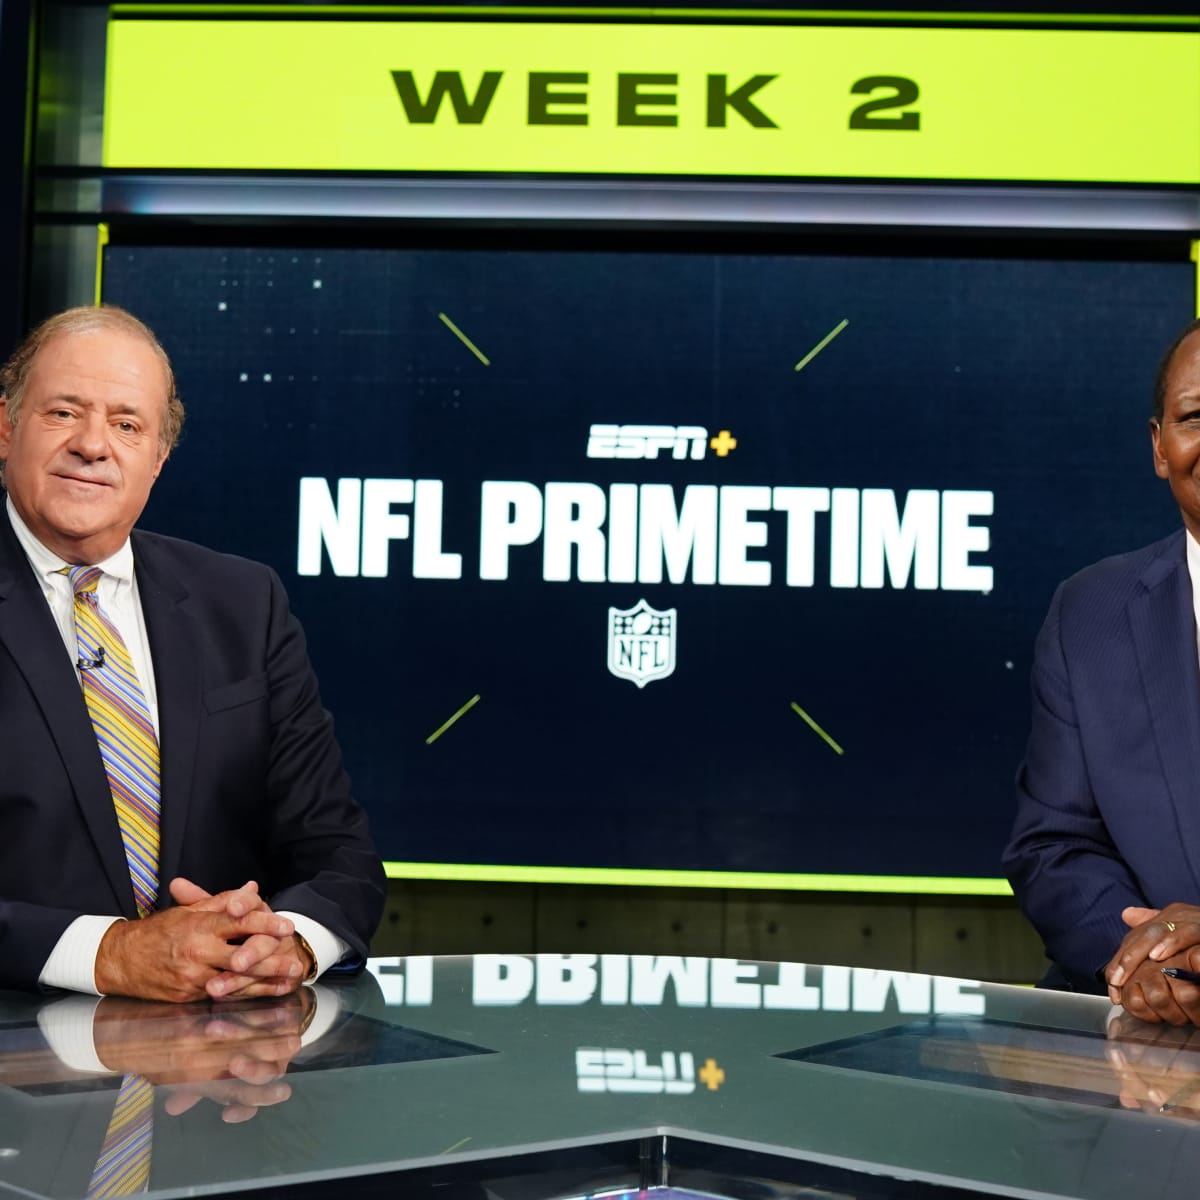 NFL Primetime 2019: ESPN reboots show with Chris Berman - Sports Illustrated